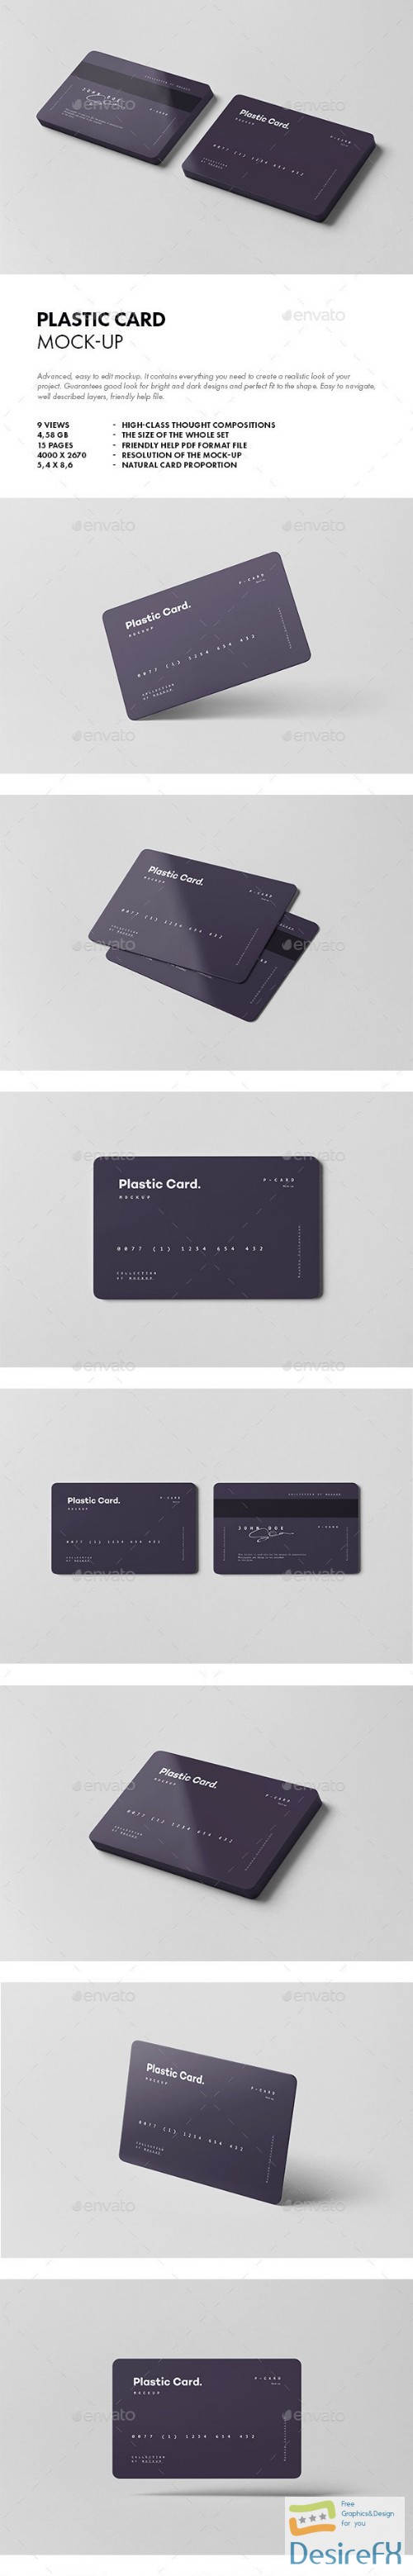 GraphicRiver - Plastic Card Mock-up - 21147824